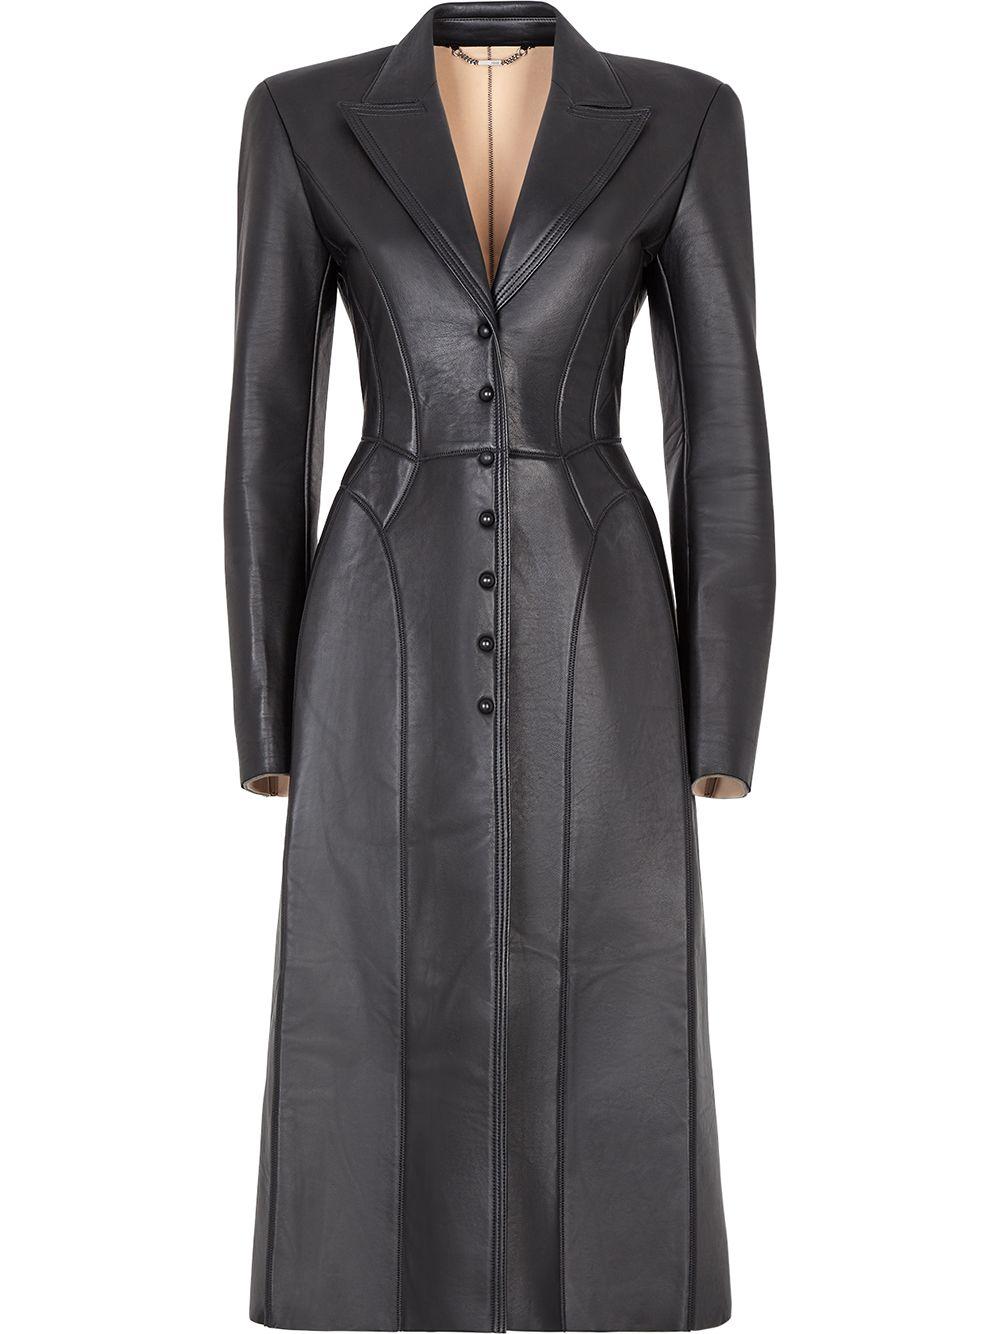 Fendi Single Breasted Leather Coat in Black | Lyst